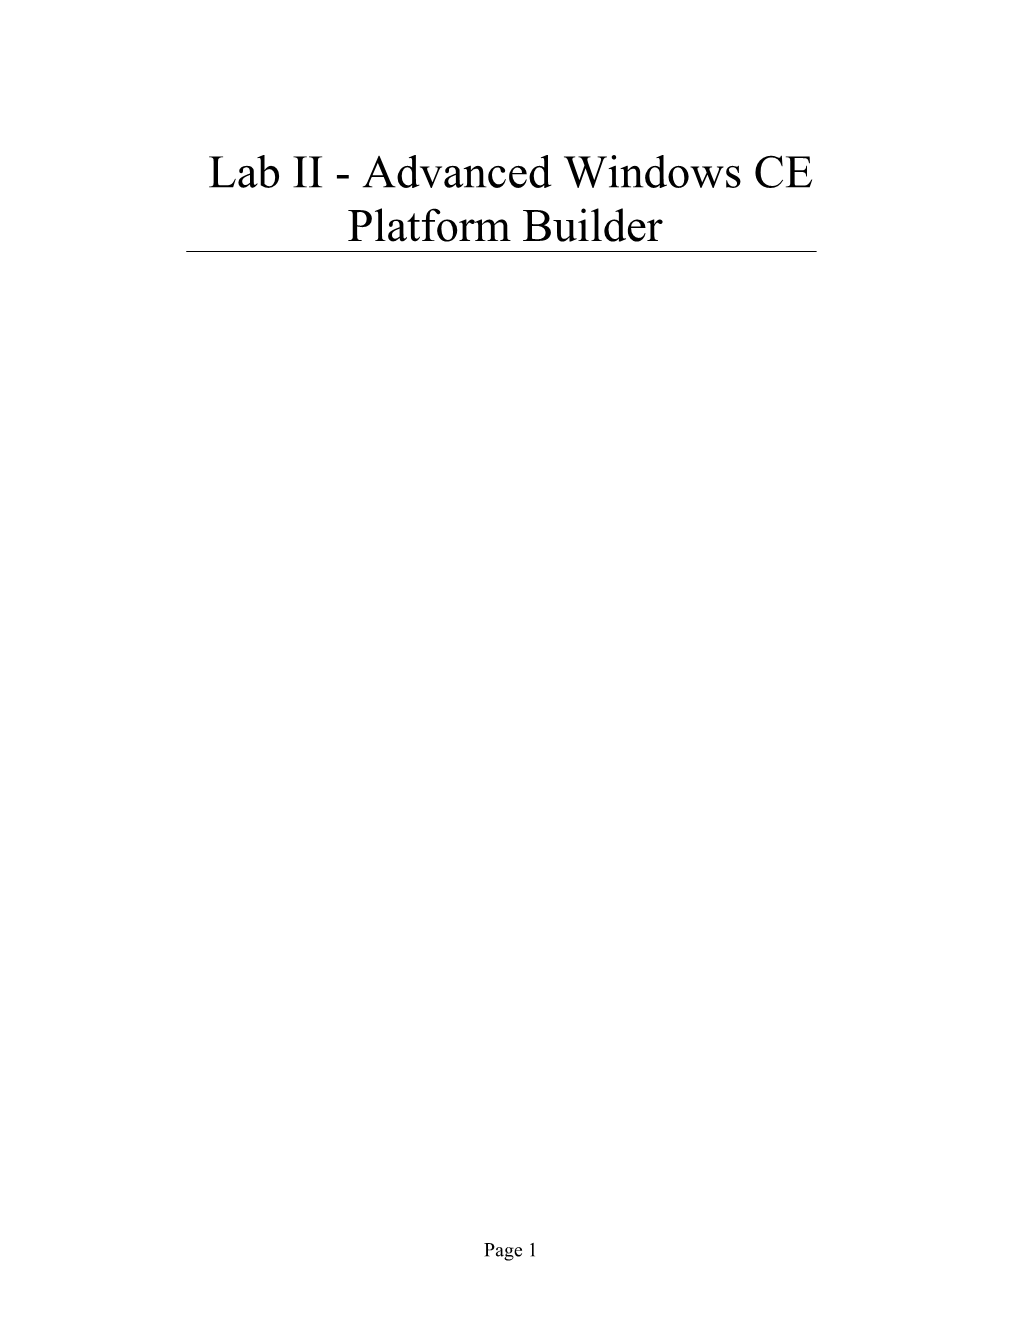 Lab II - Advanced Windows CE Platform Builder